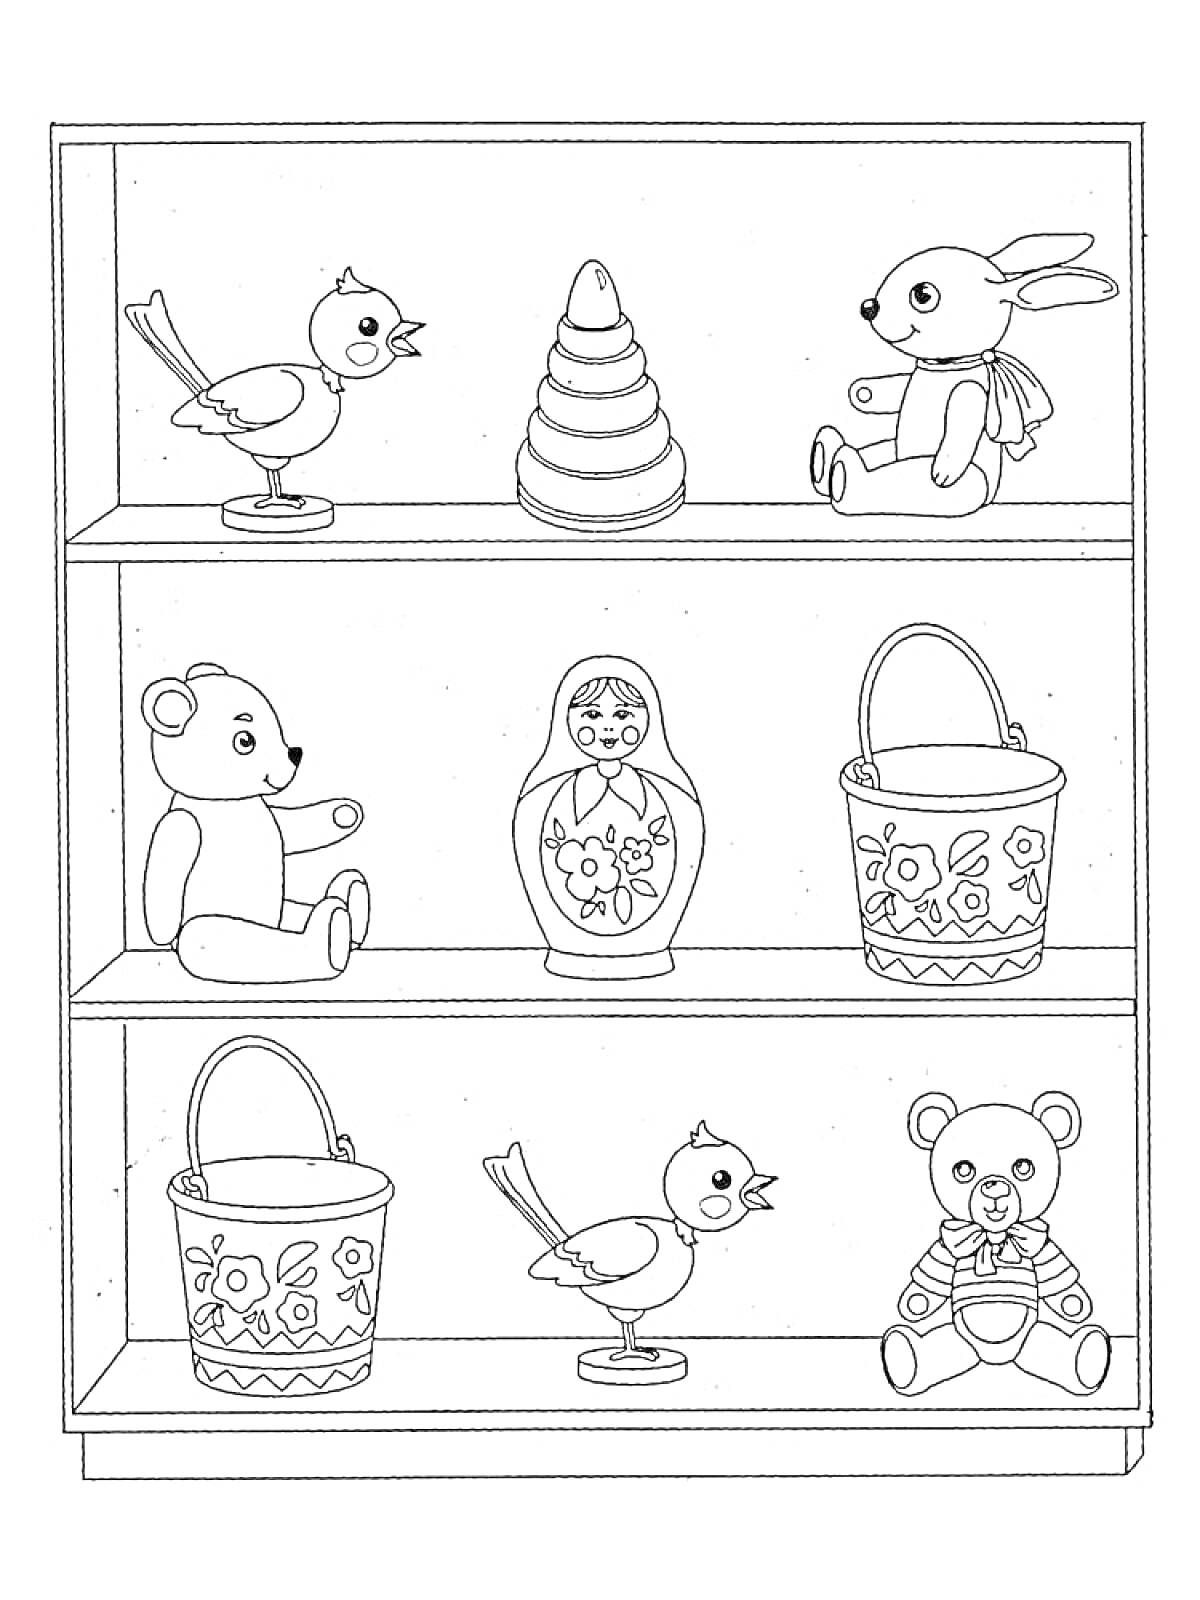 На раскраске изображено: Магазин игрушек, Заяц, Медведь, Матрешка, Ведёрко, Игрушки, Кукла, Полки, Пирамида, Птица